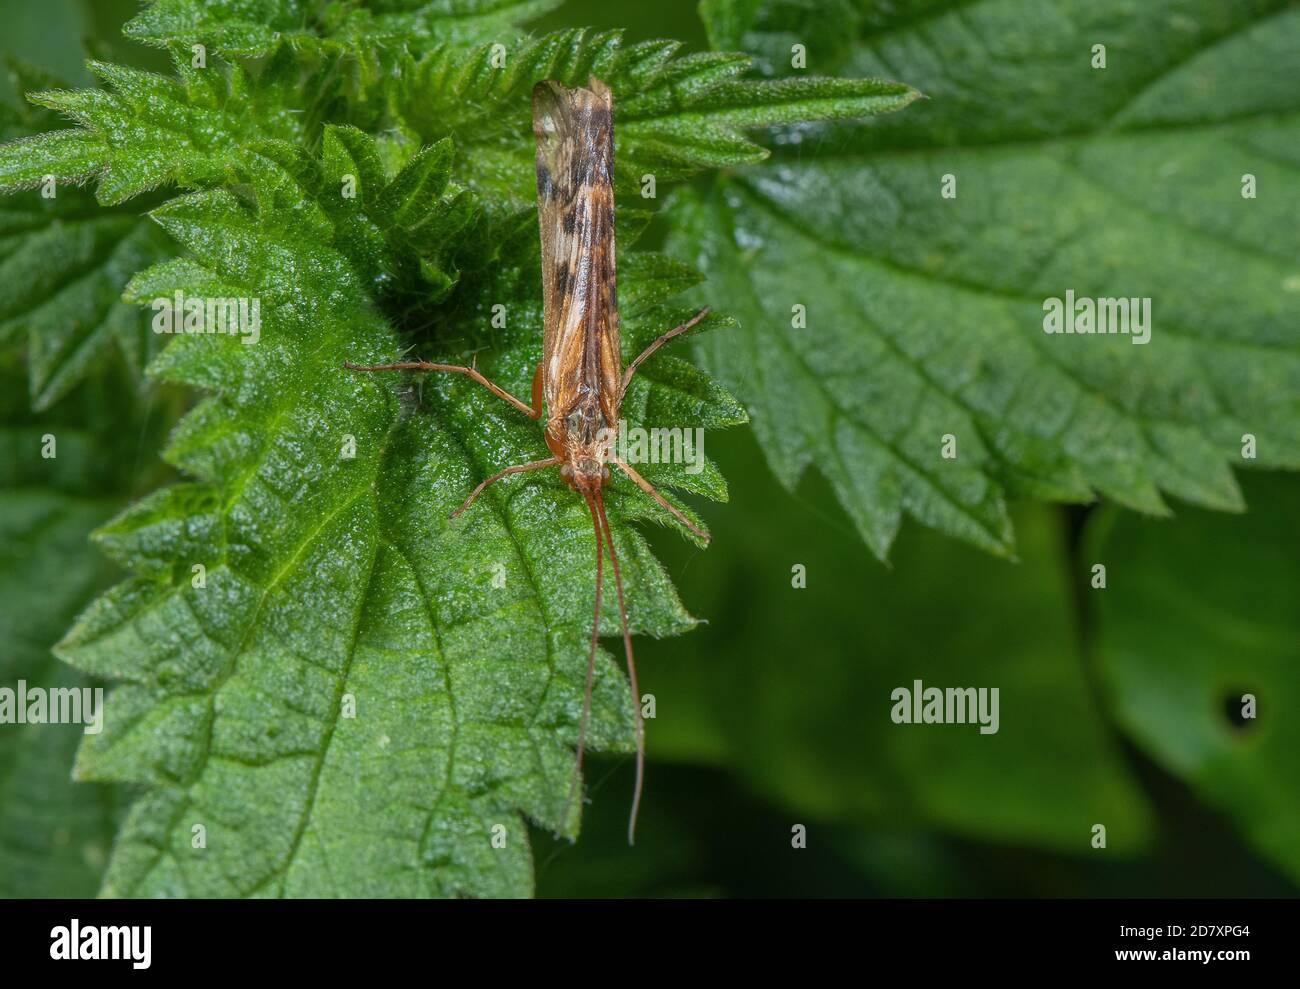 Eine Kadadisfly, Zimt Sedge, Limnephilus lunatus, thront auf Flussufer Vegetation, Stour Valley, Dorset. Stockfoto